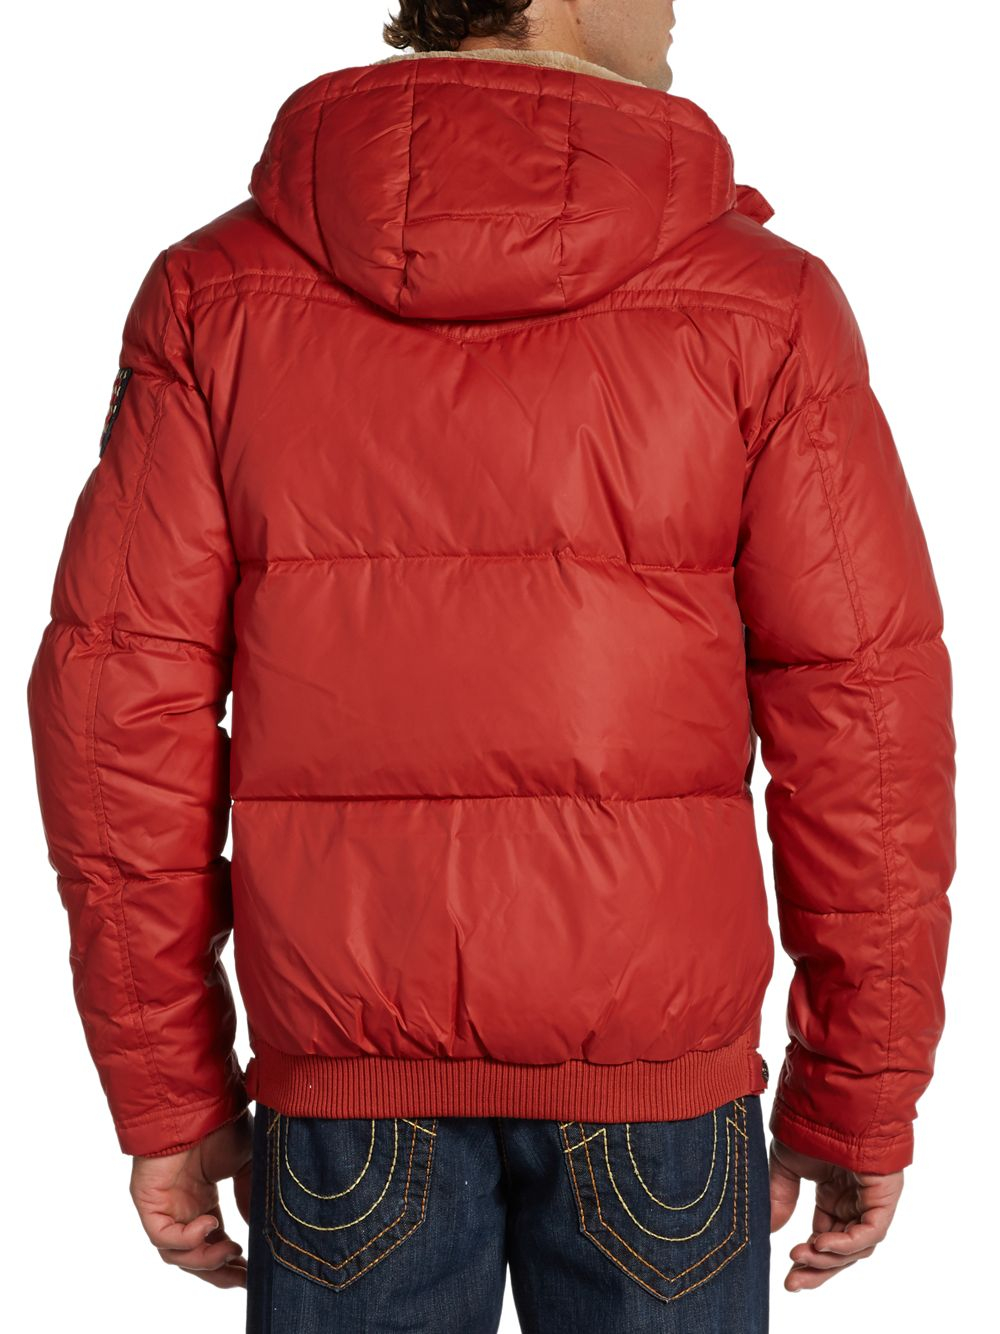 Lyst - True Religion Faux Shearling Puffer Jacket in Red for Men